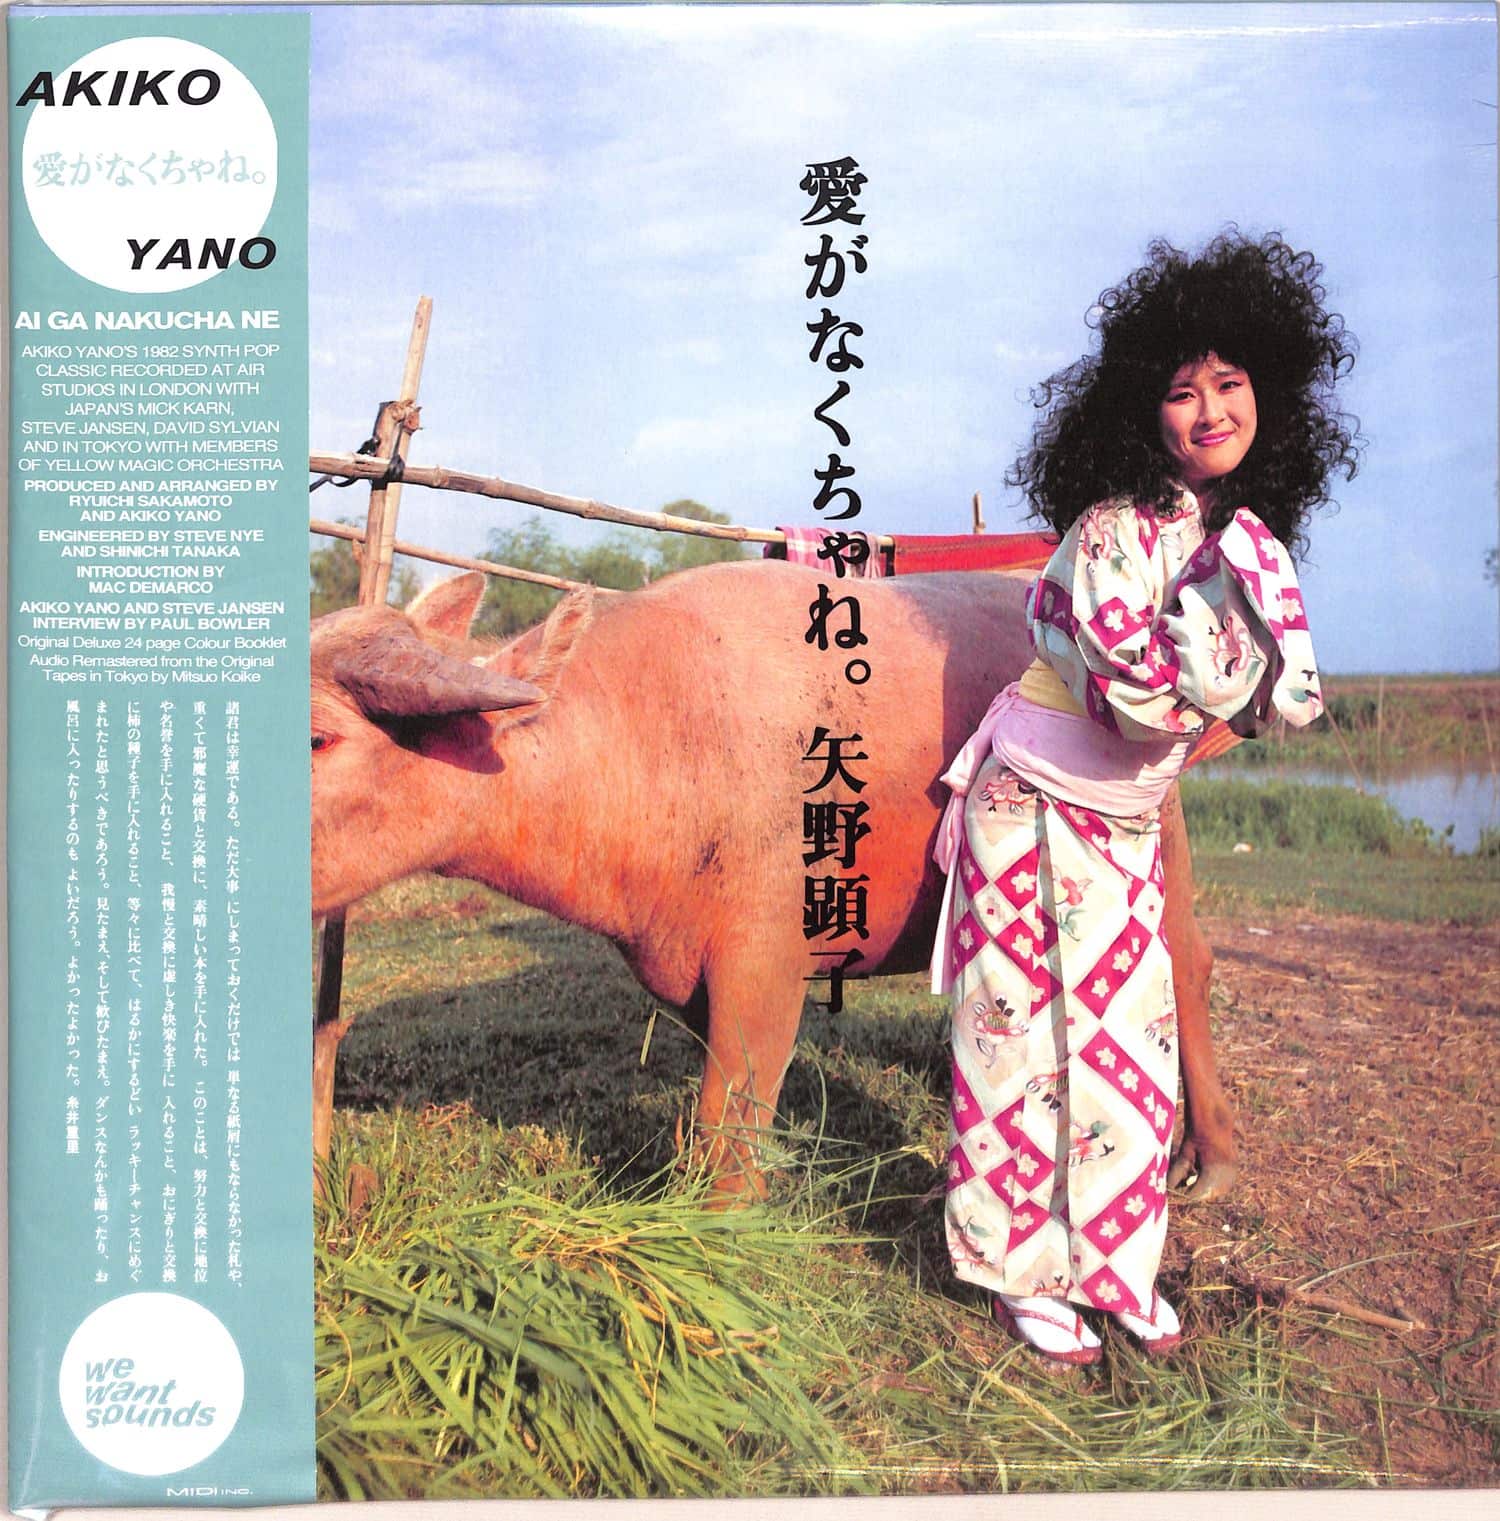 Akiko Yano - AI GA NAKUCHA NE 